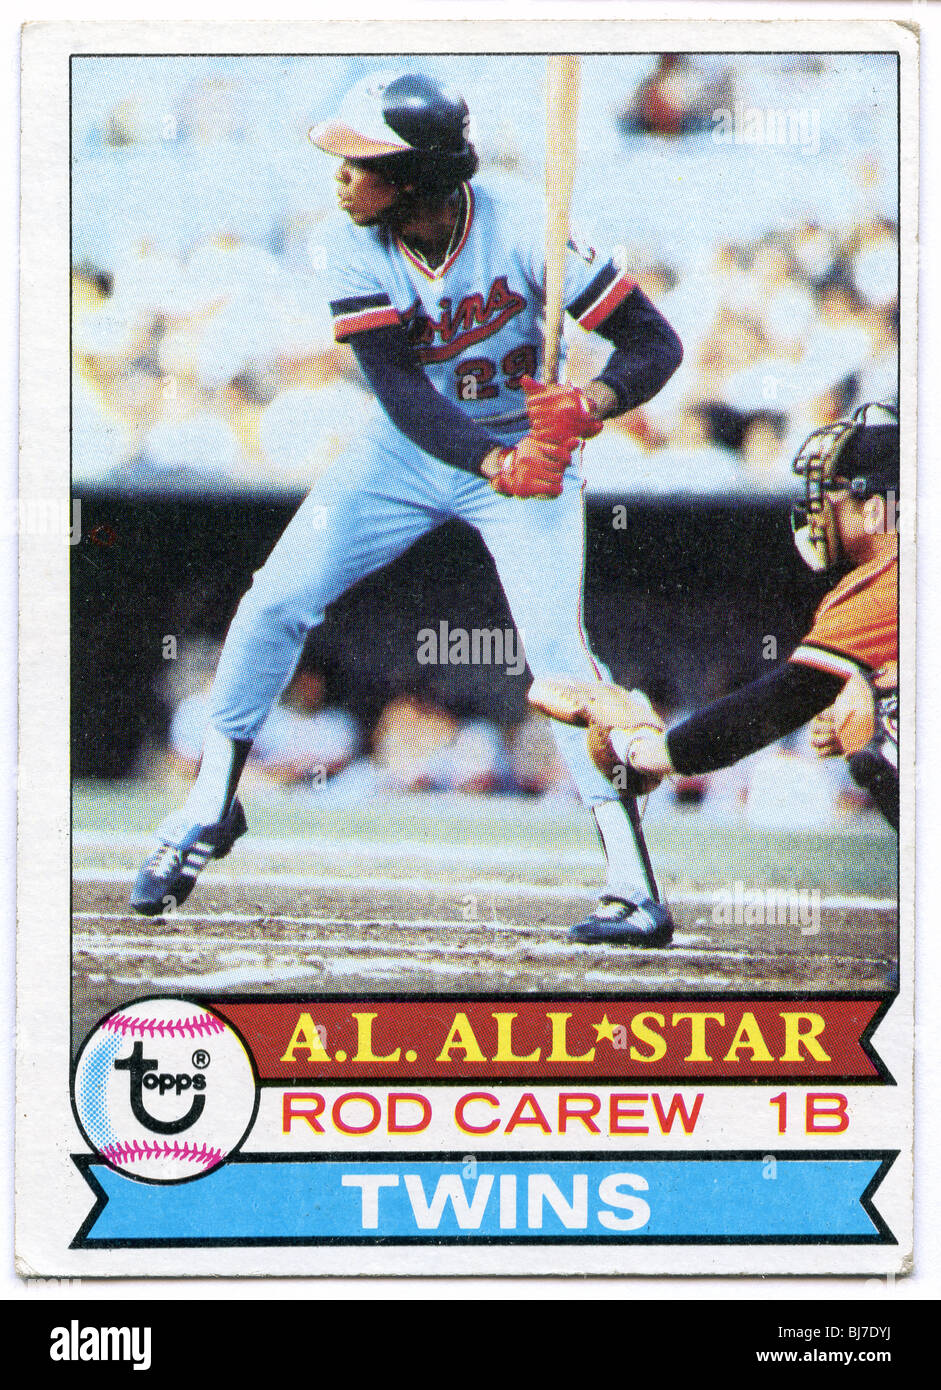 Collectible baseball card - Rod Carew of Twins Stock Photo - Alamy